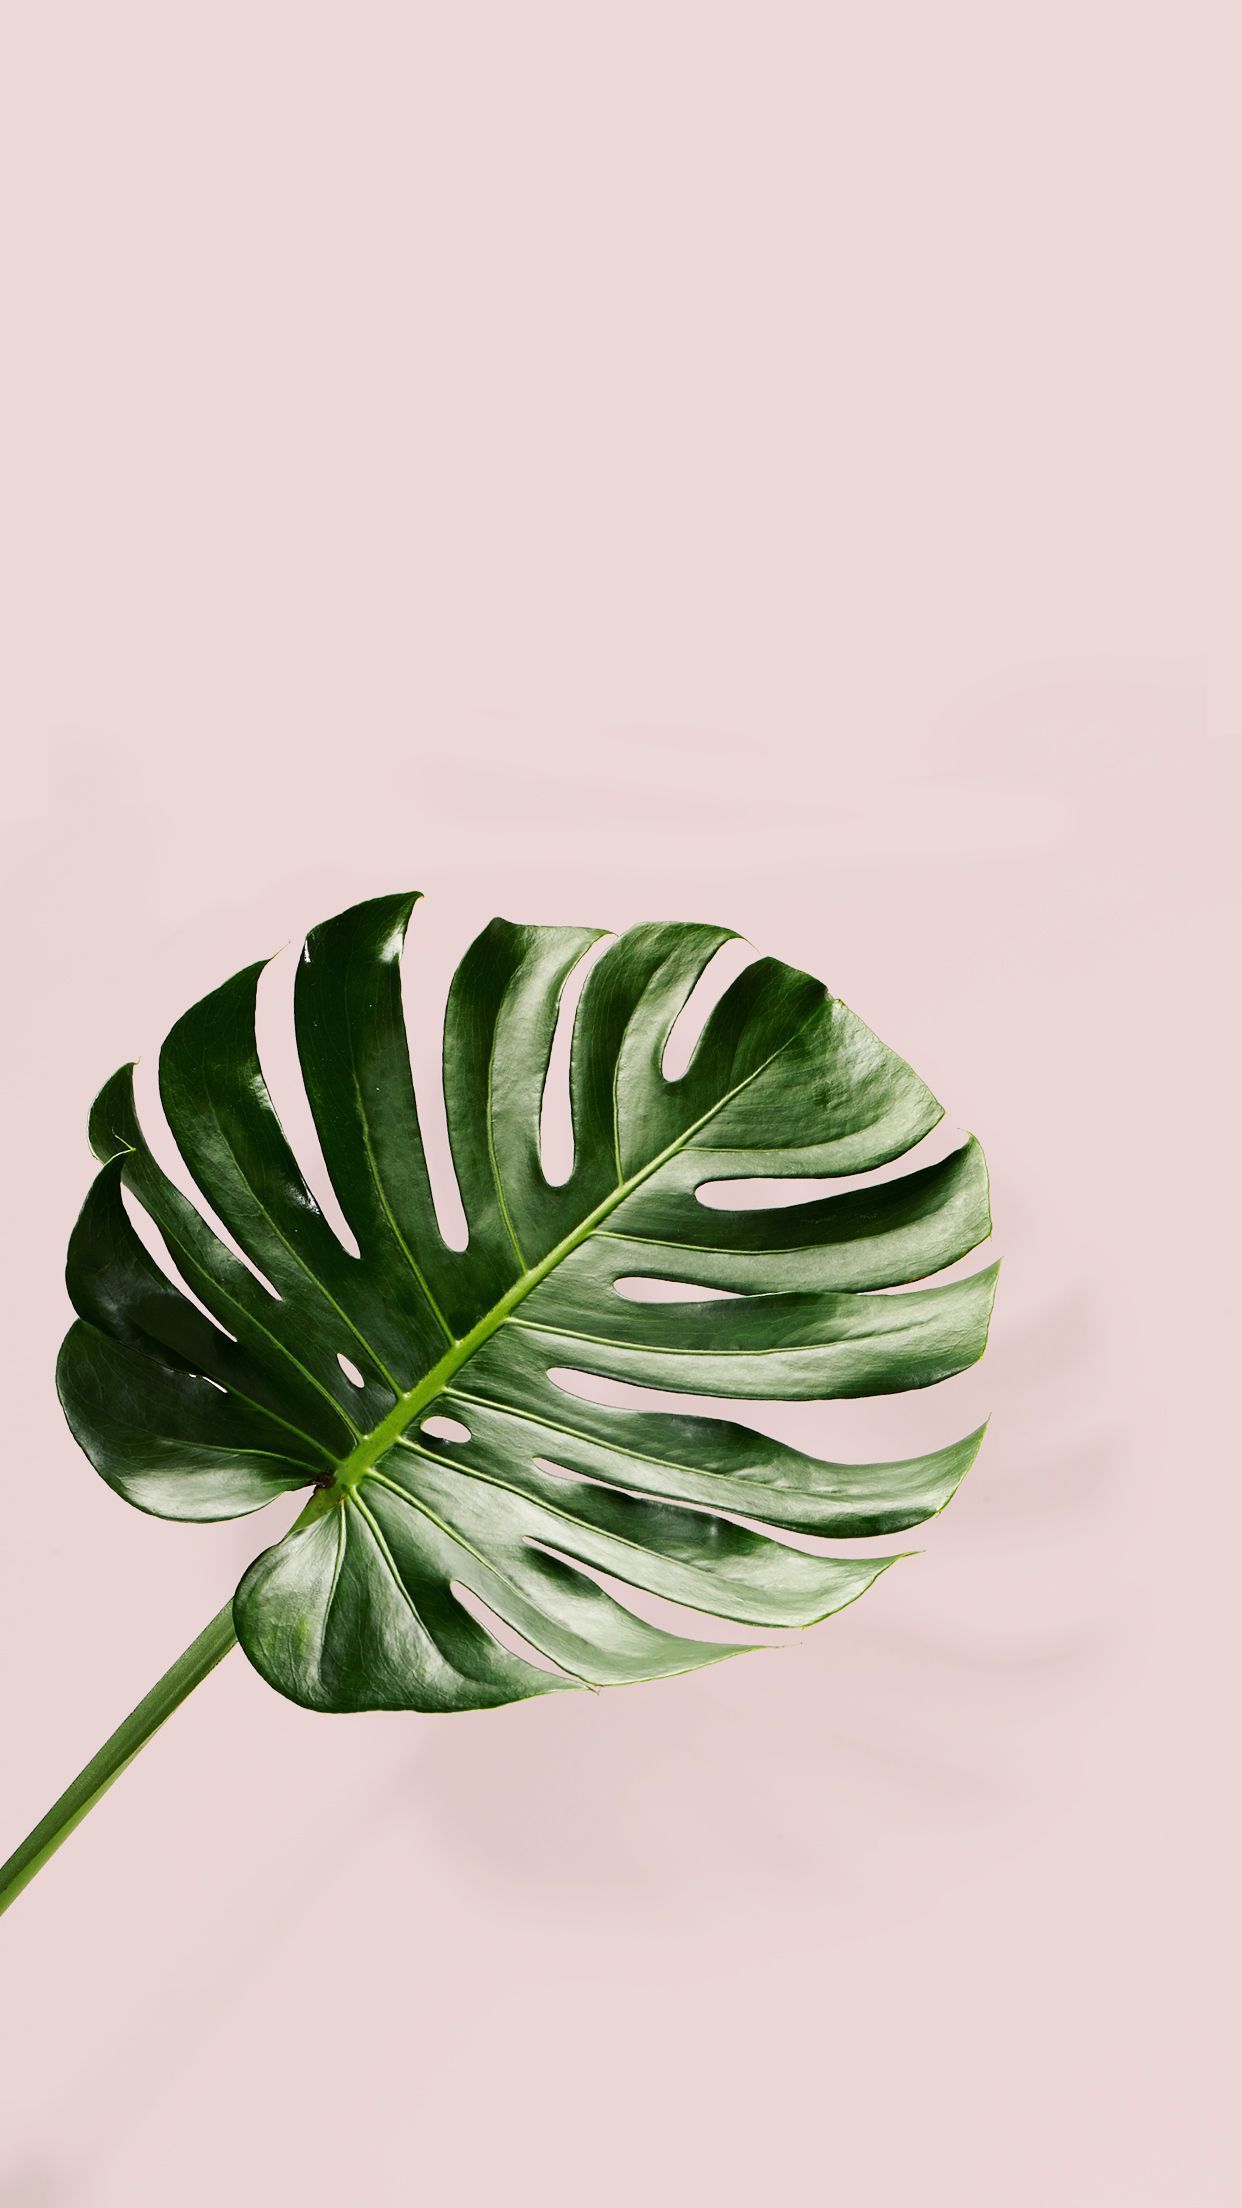 Wallpaper #iPhoneBackground. Plant wallpaper, Palm leaf wallpaper, Leaf wallpaper